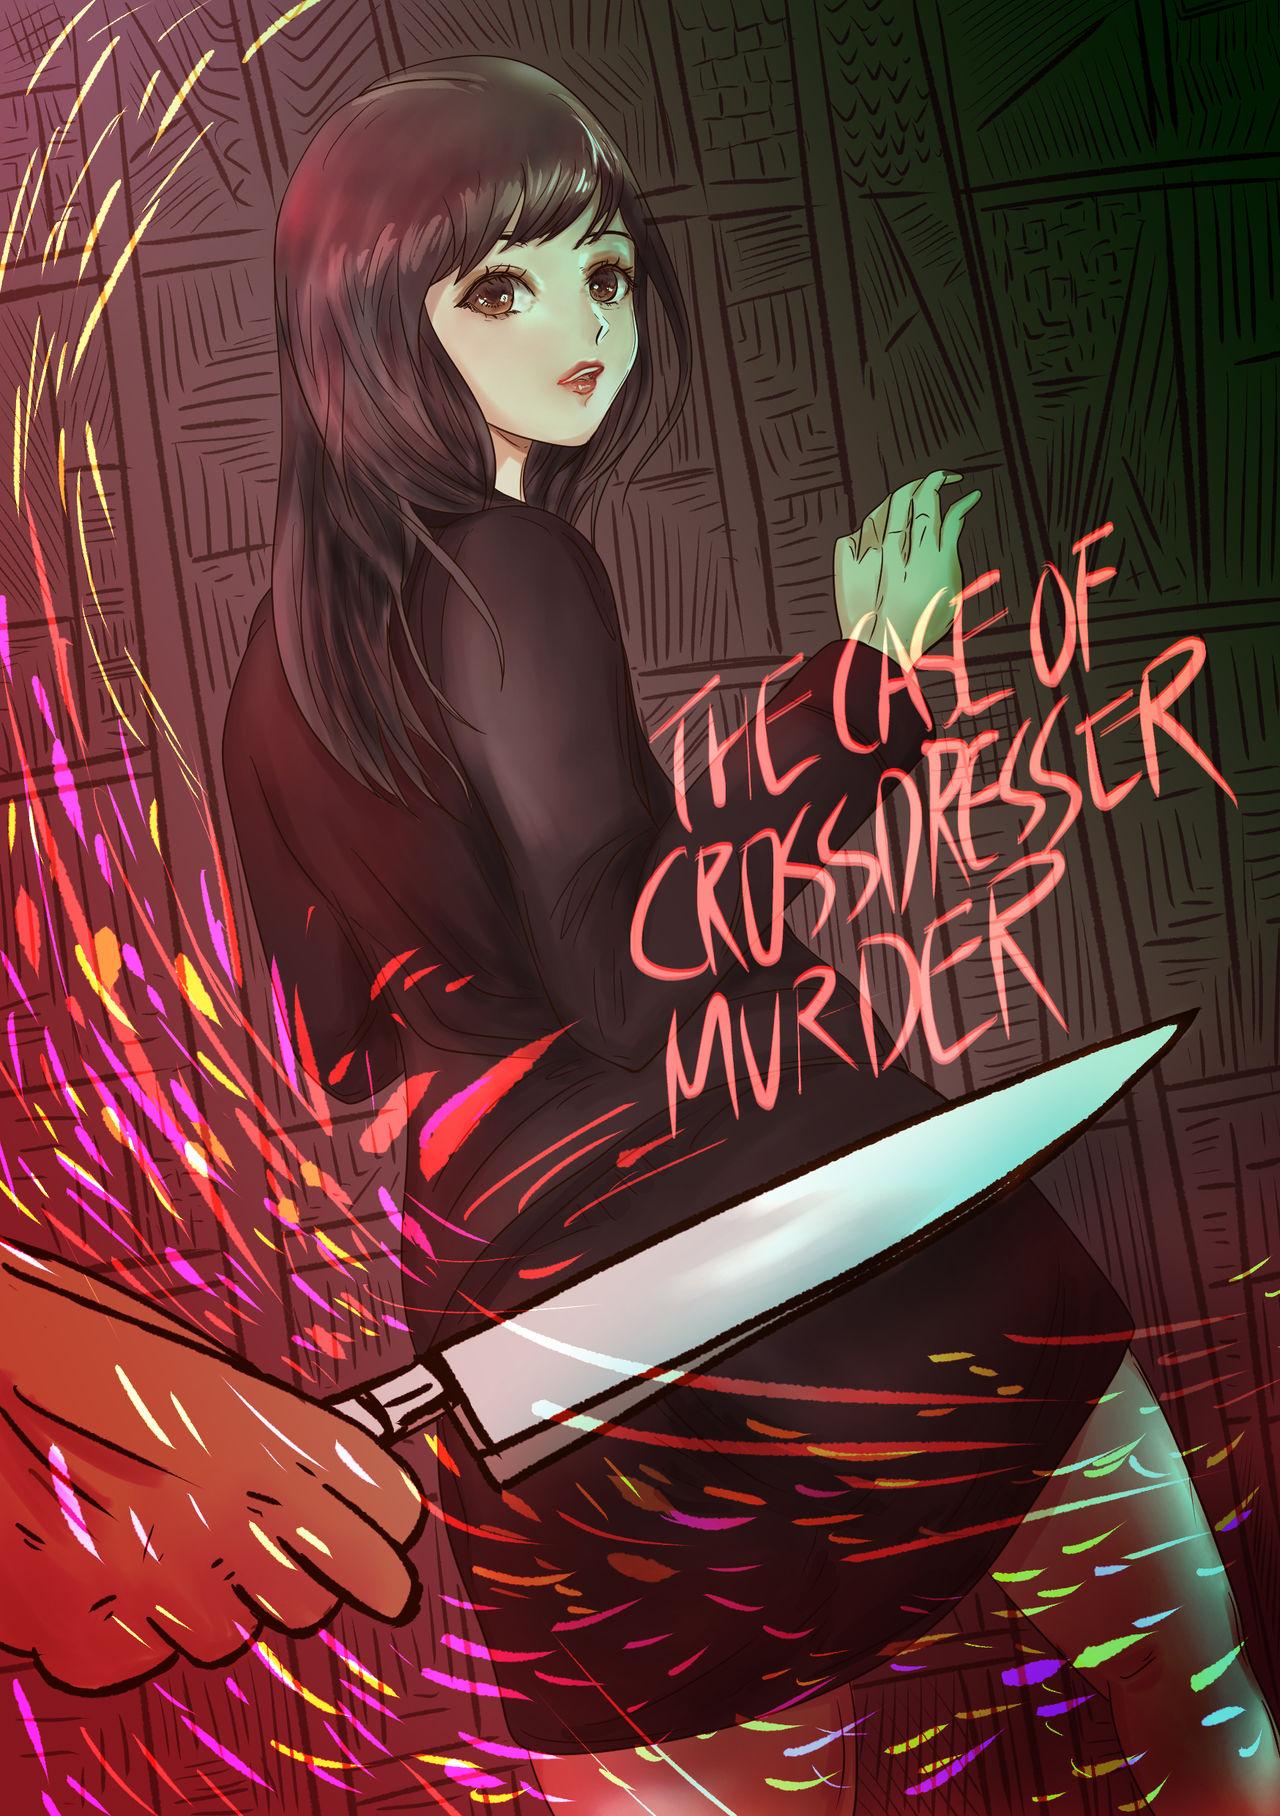 The case of crossdresser murderi(ENG)女装男子殺人事件 2